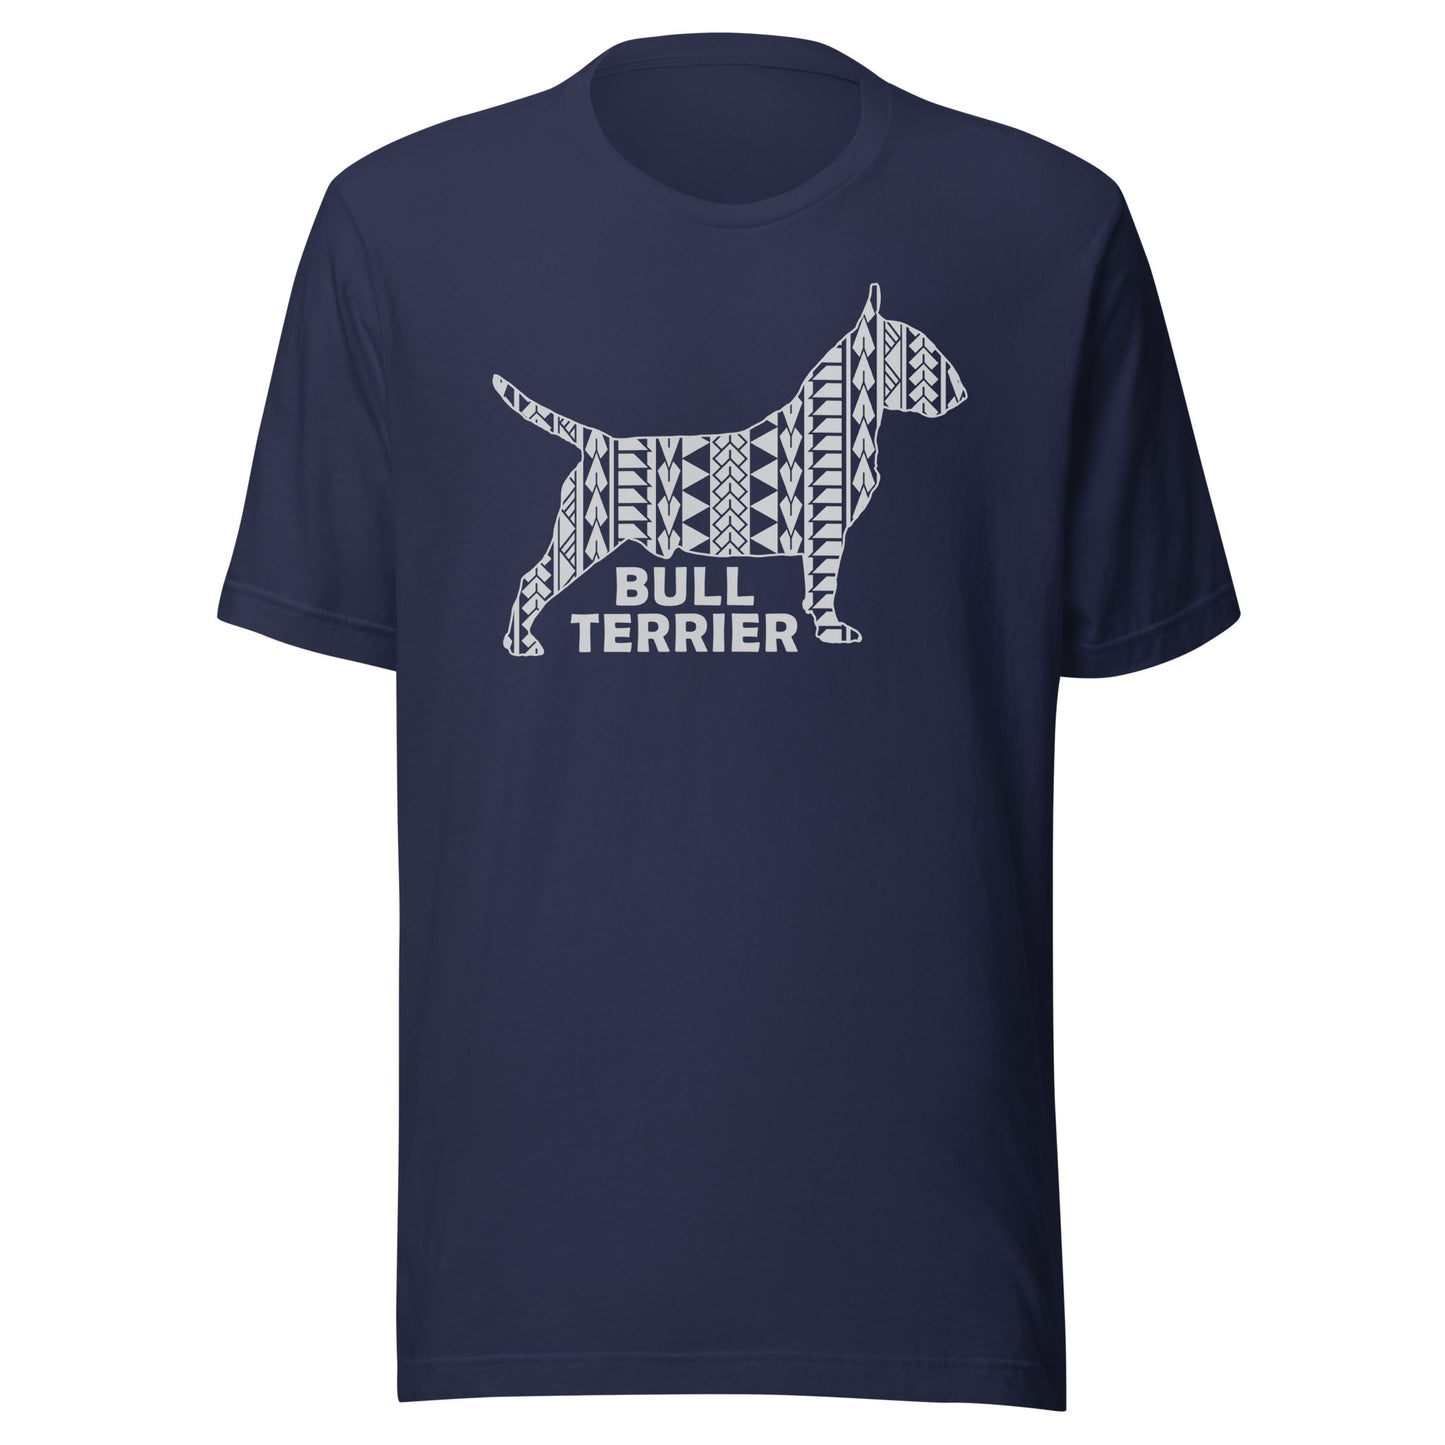 Bull Terrier Polynesian t-shirt navy by Dog Artistry.